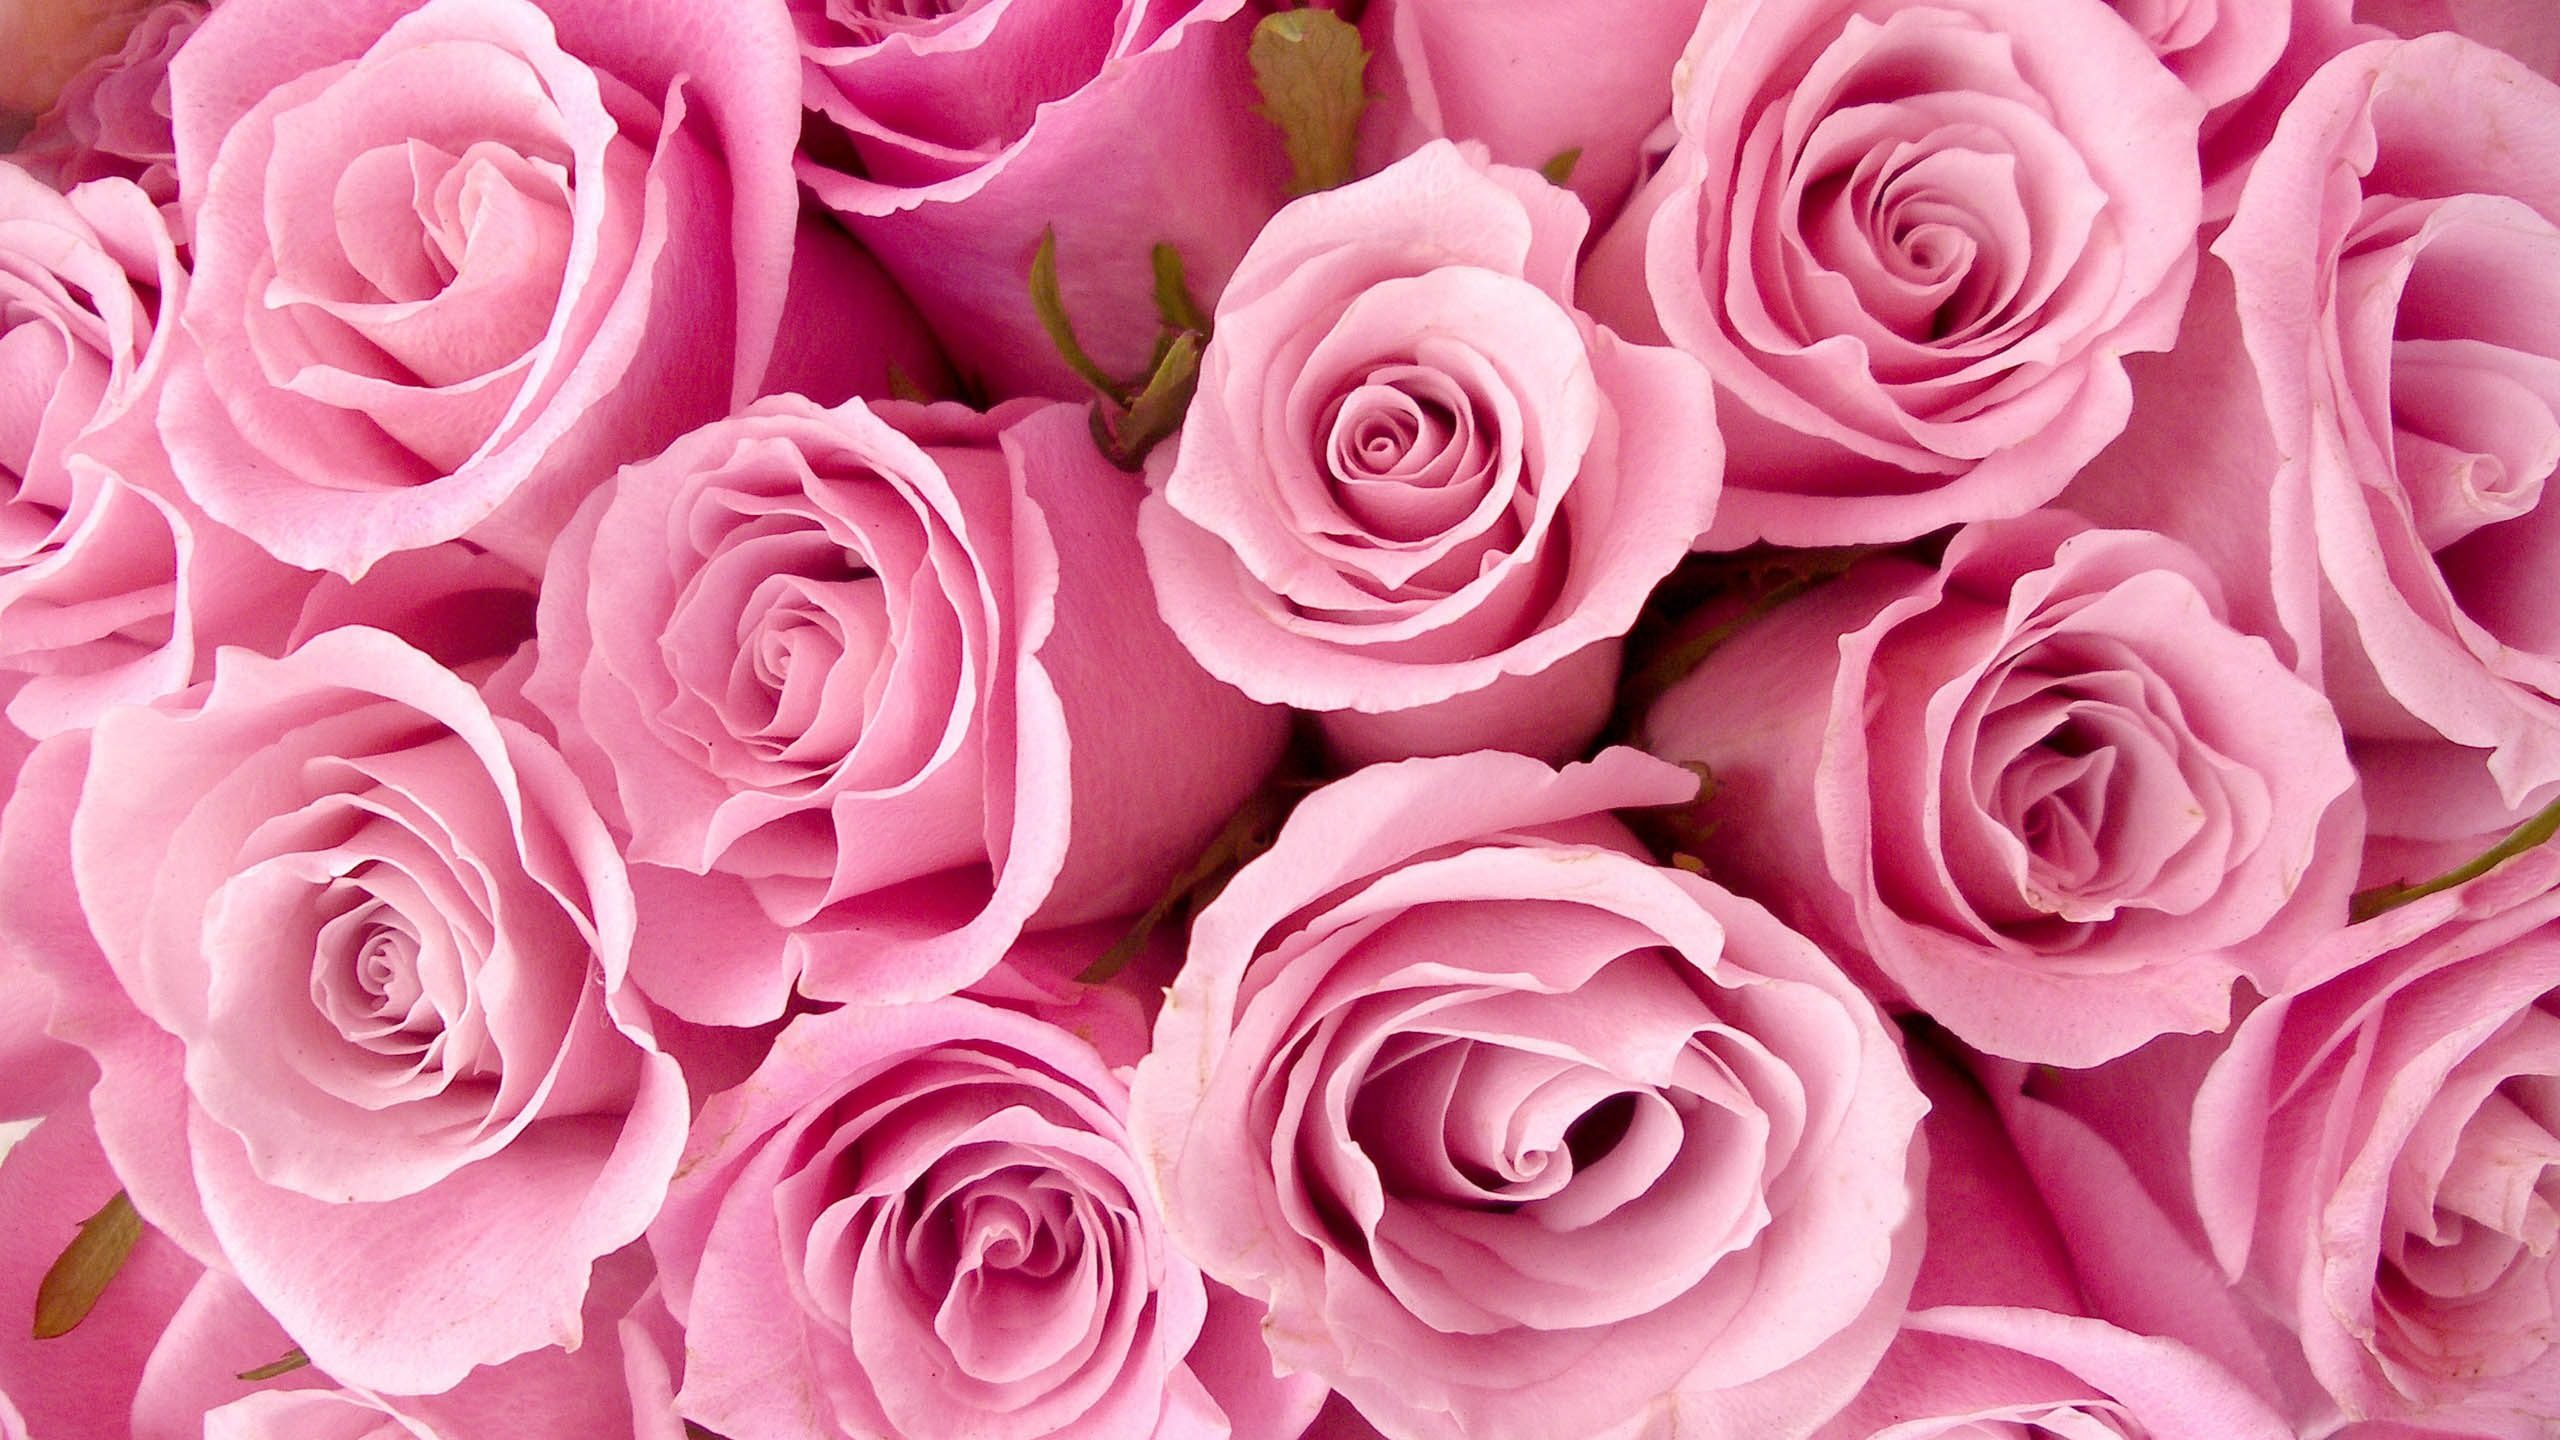 fiore rosa wallpaper hd,fiore,rose da giardino,rosa,rosa,floribunda